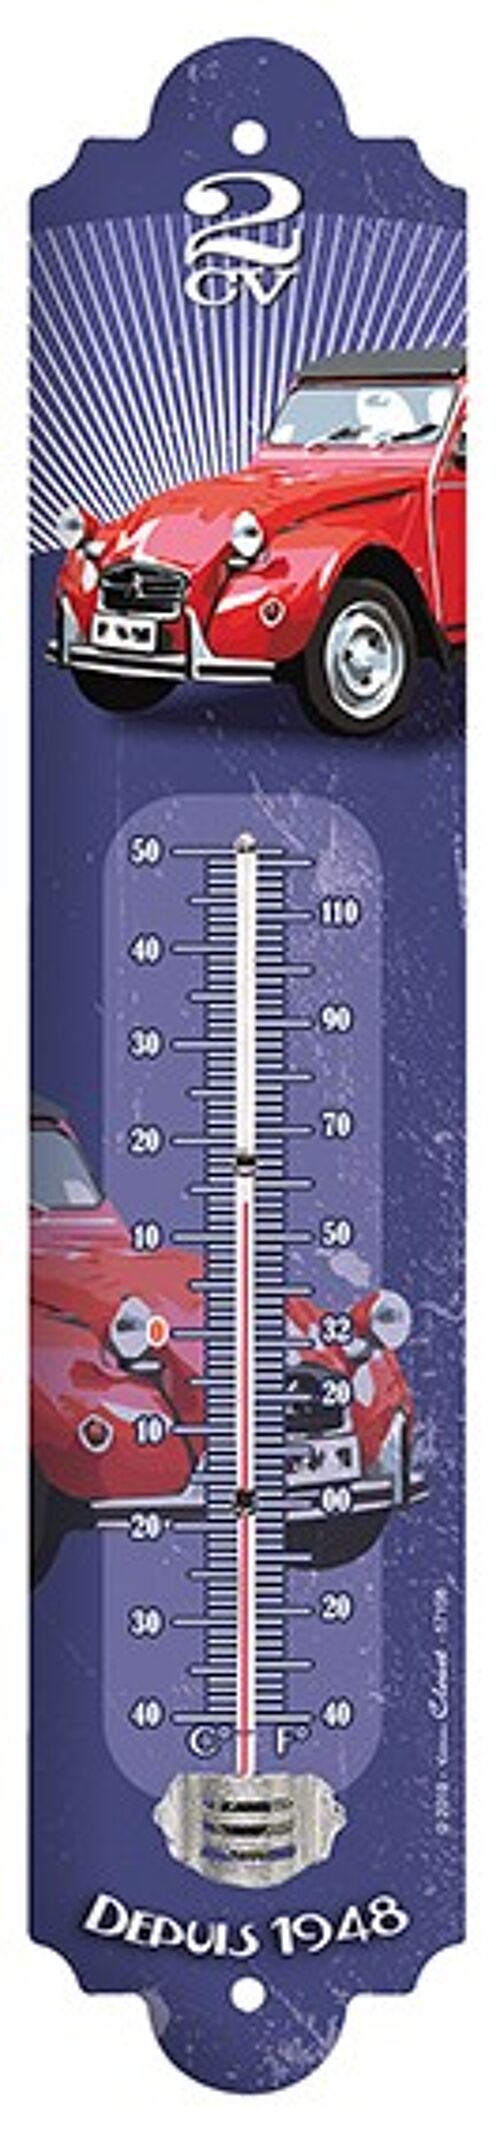 Thermomètre Vintage 2 cv 2018 thermometre